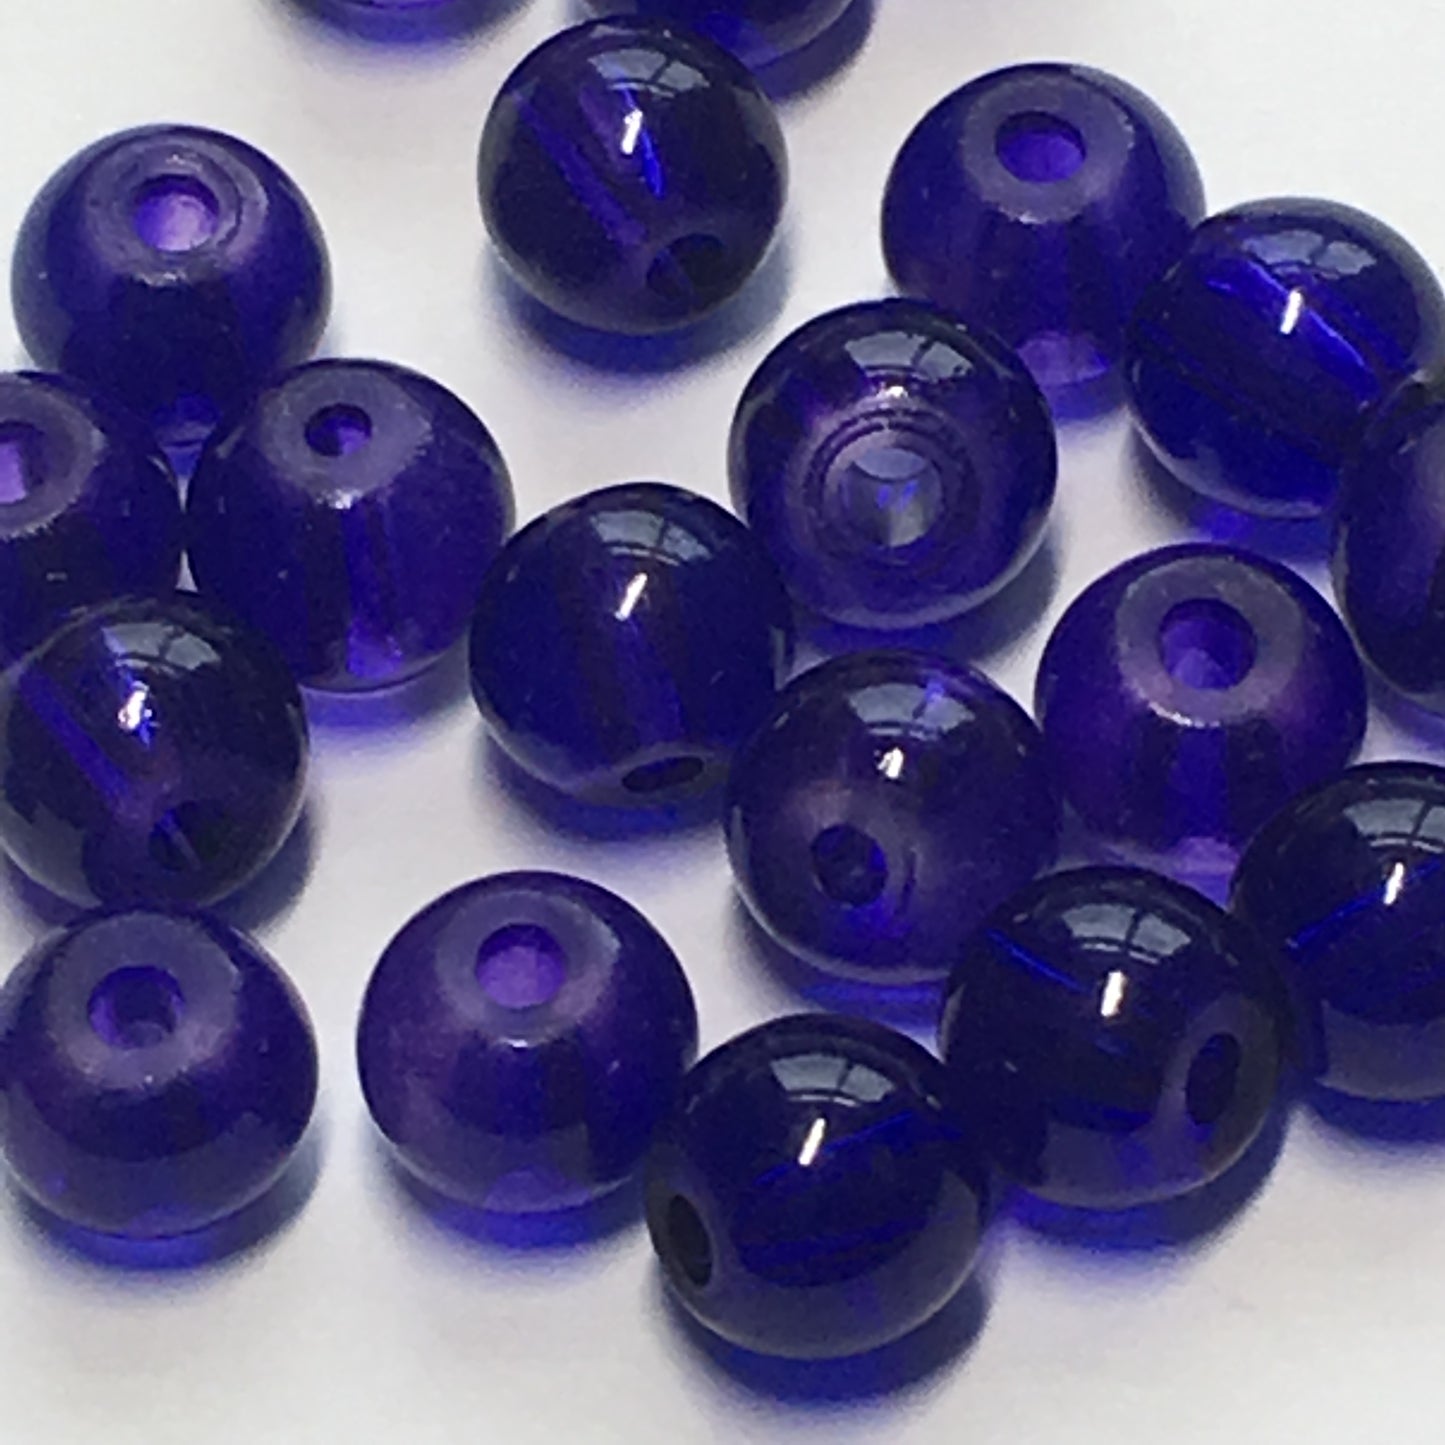 Transparent Dark Purple Round Glass Beads, 5 mm, 24 or 25 Beads